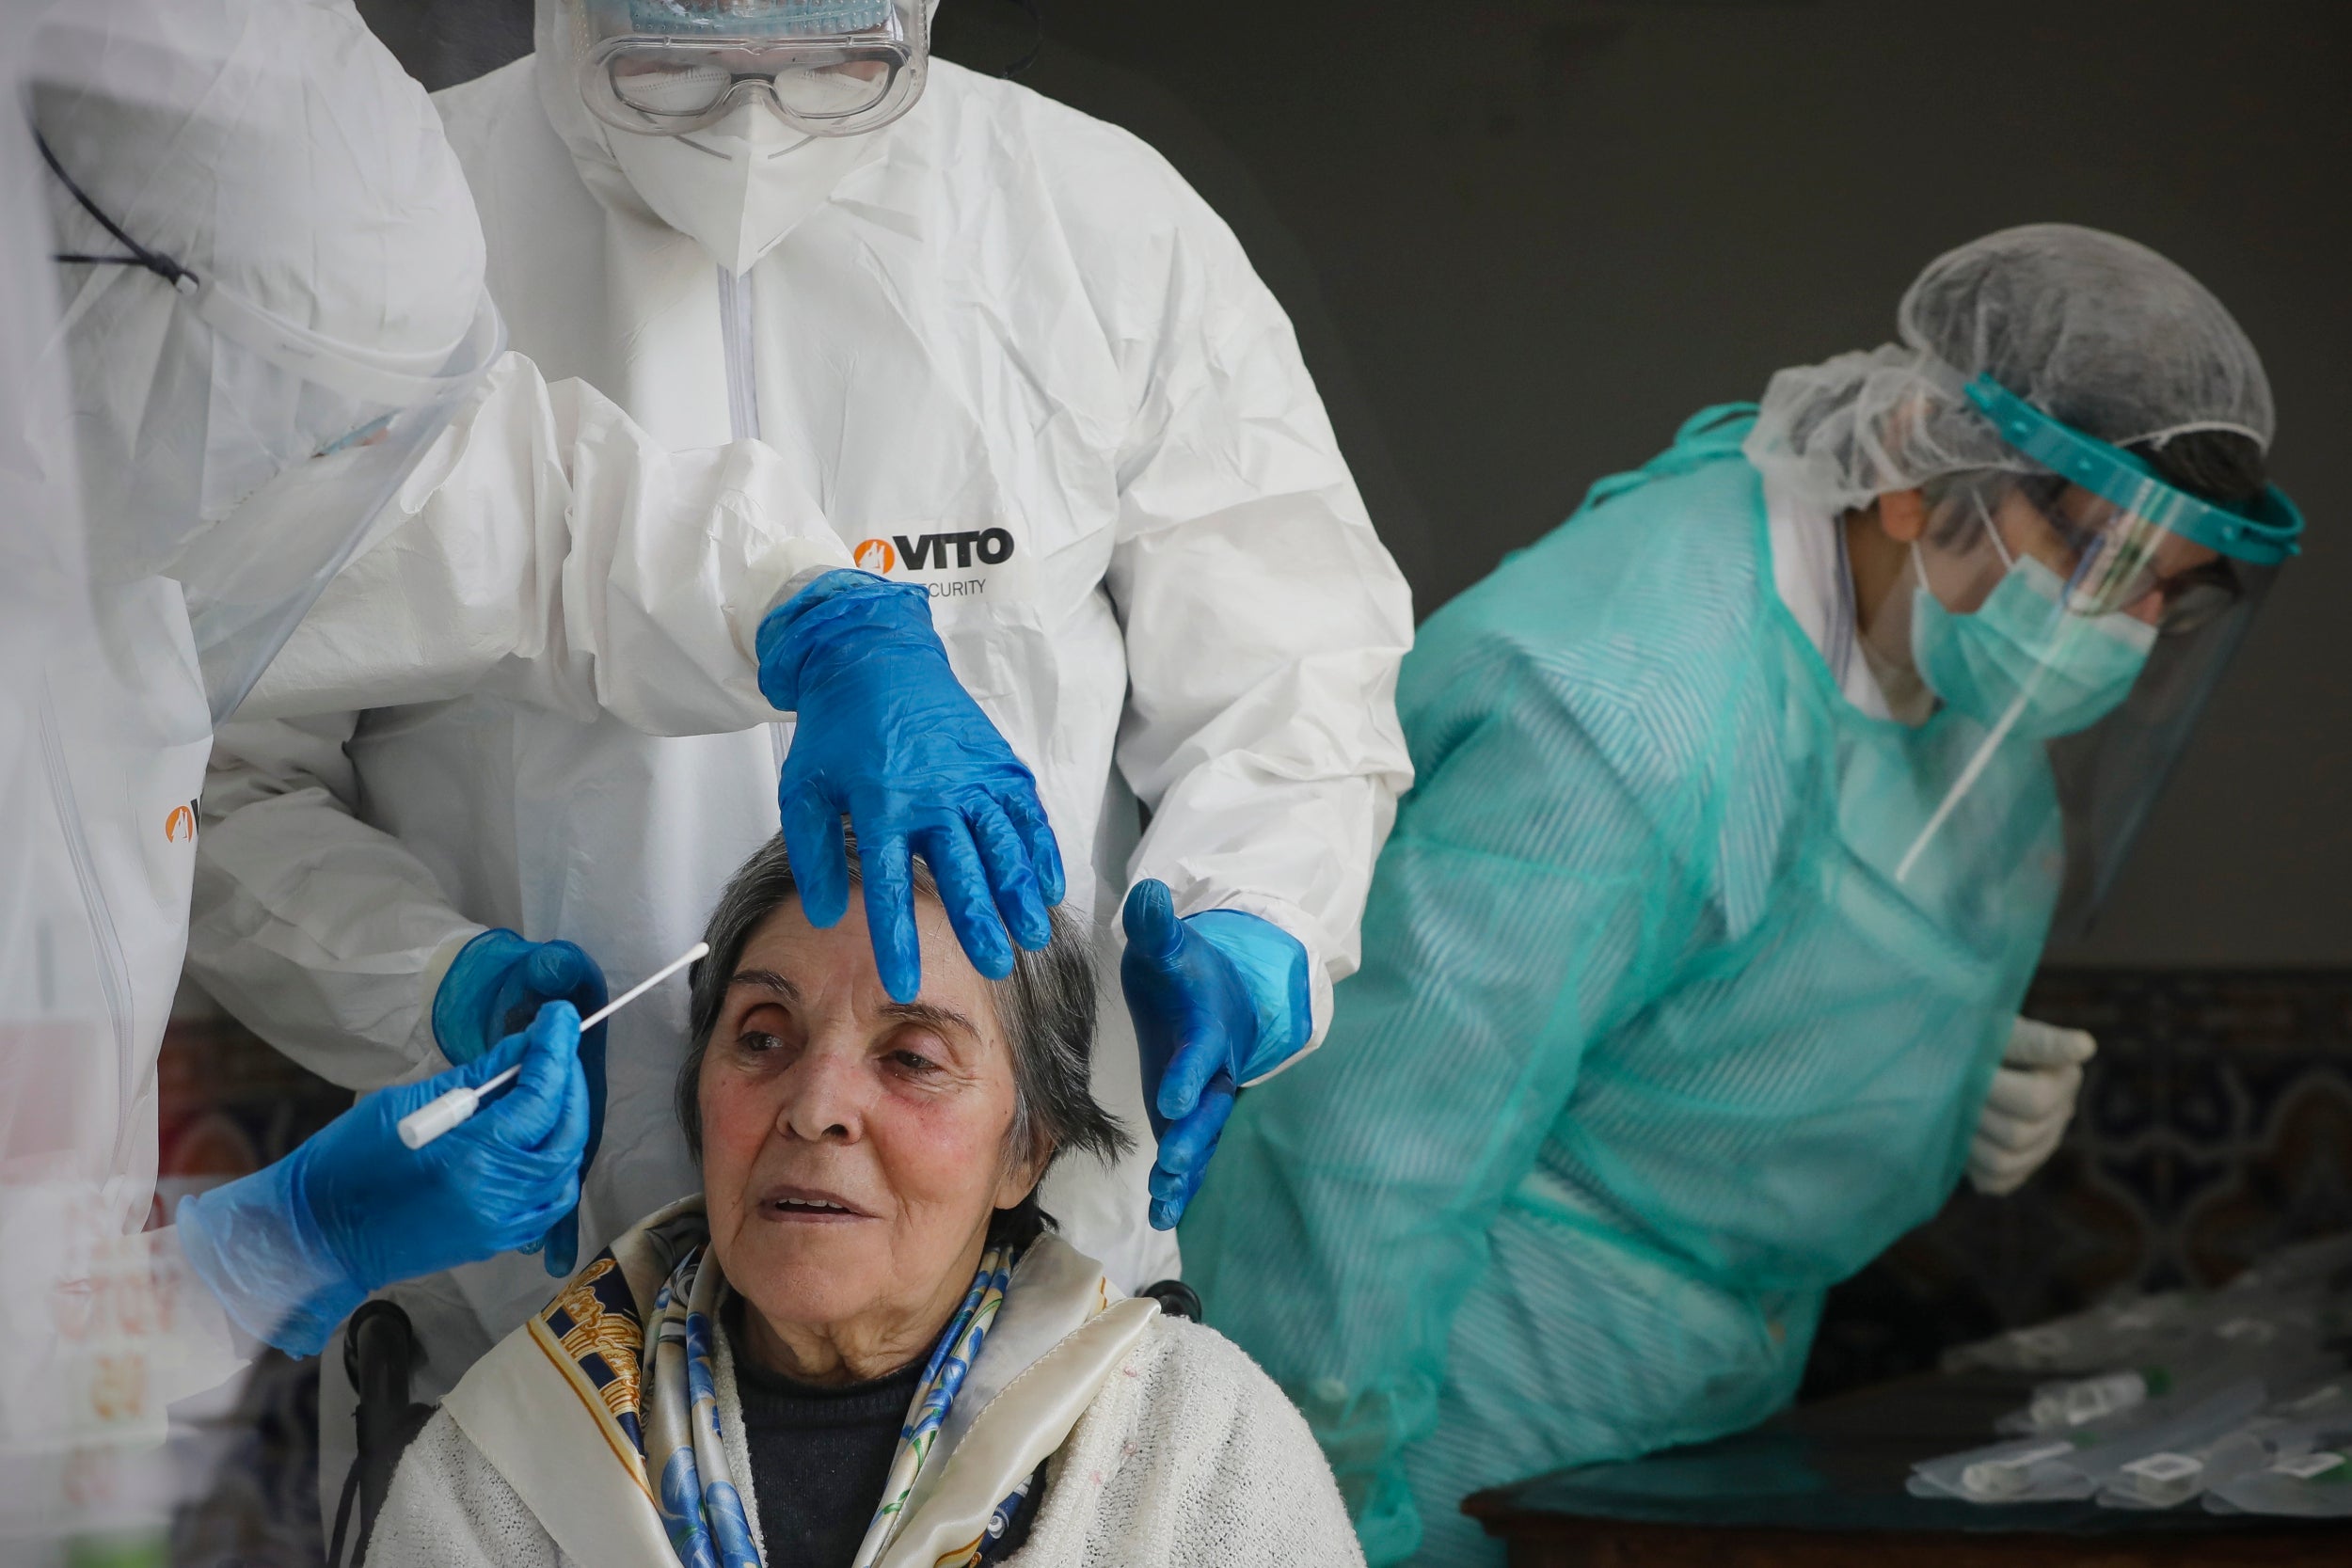 A woman undergoes Covid-19 screening tests in Santa Maria da Feira, Portugal